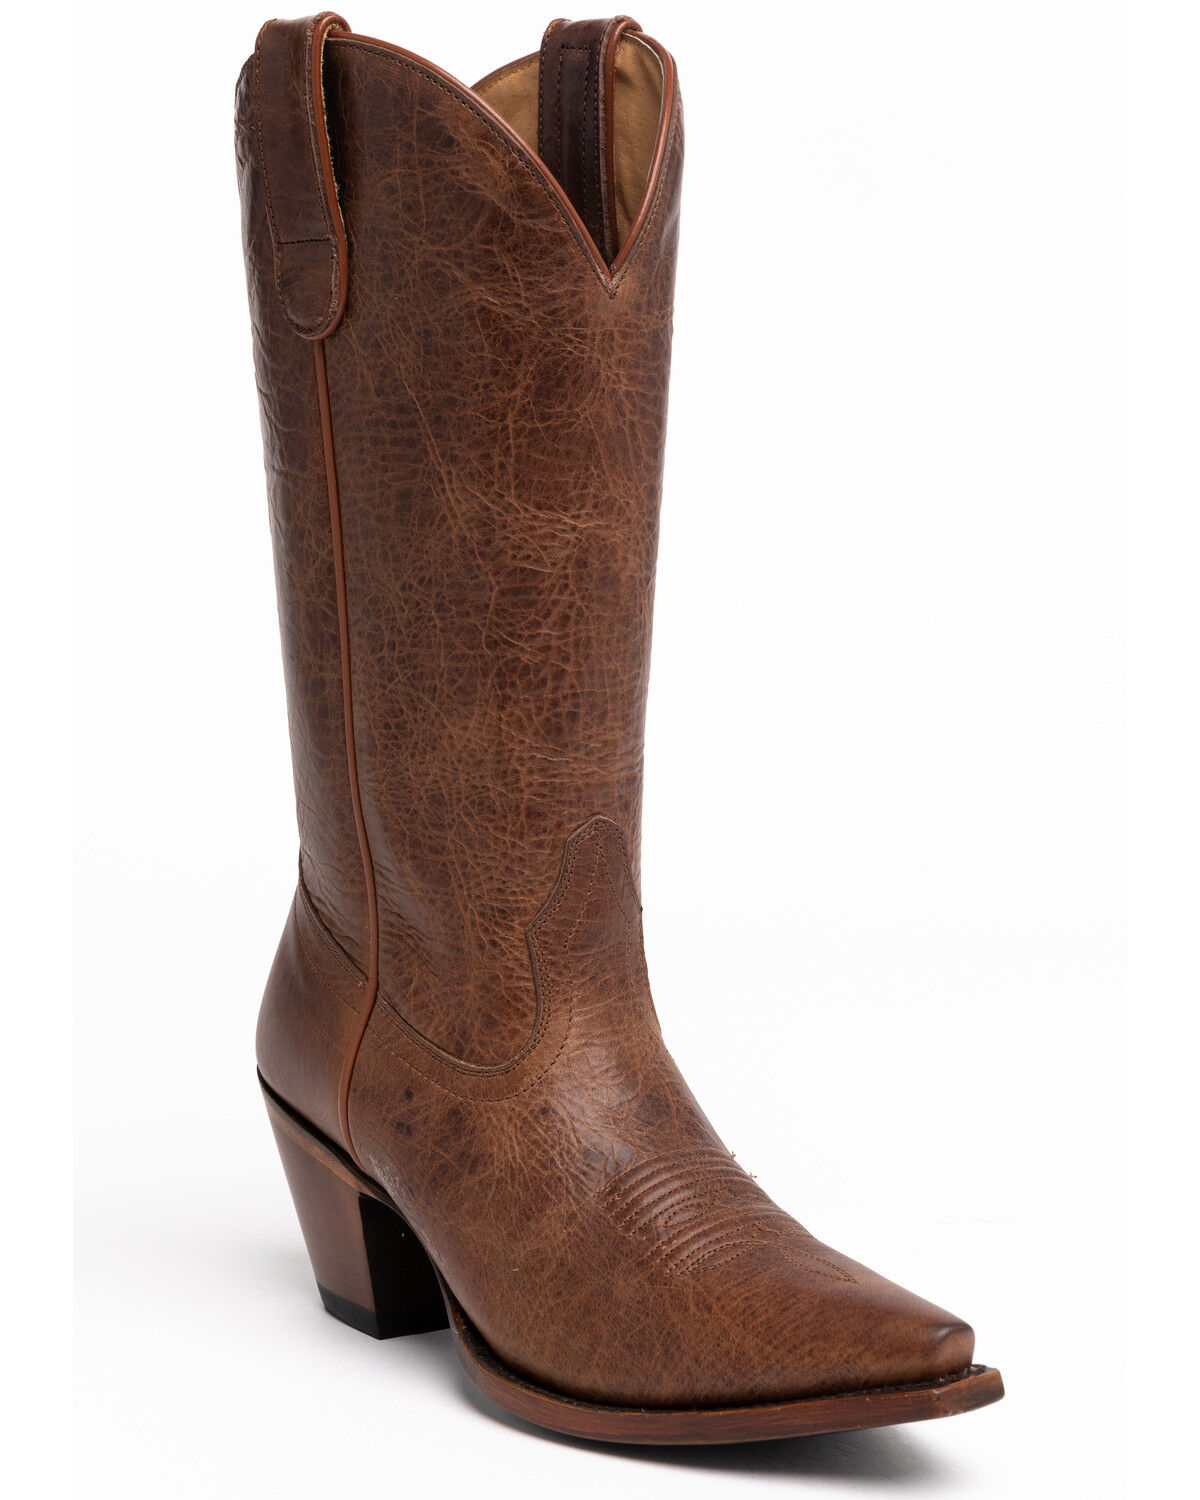 Trish Western Boots - Snip Toe 